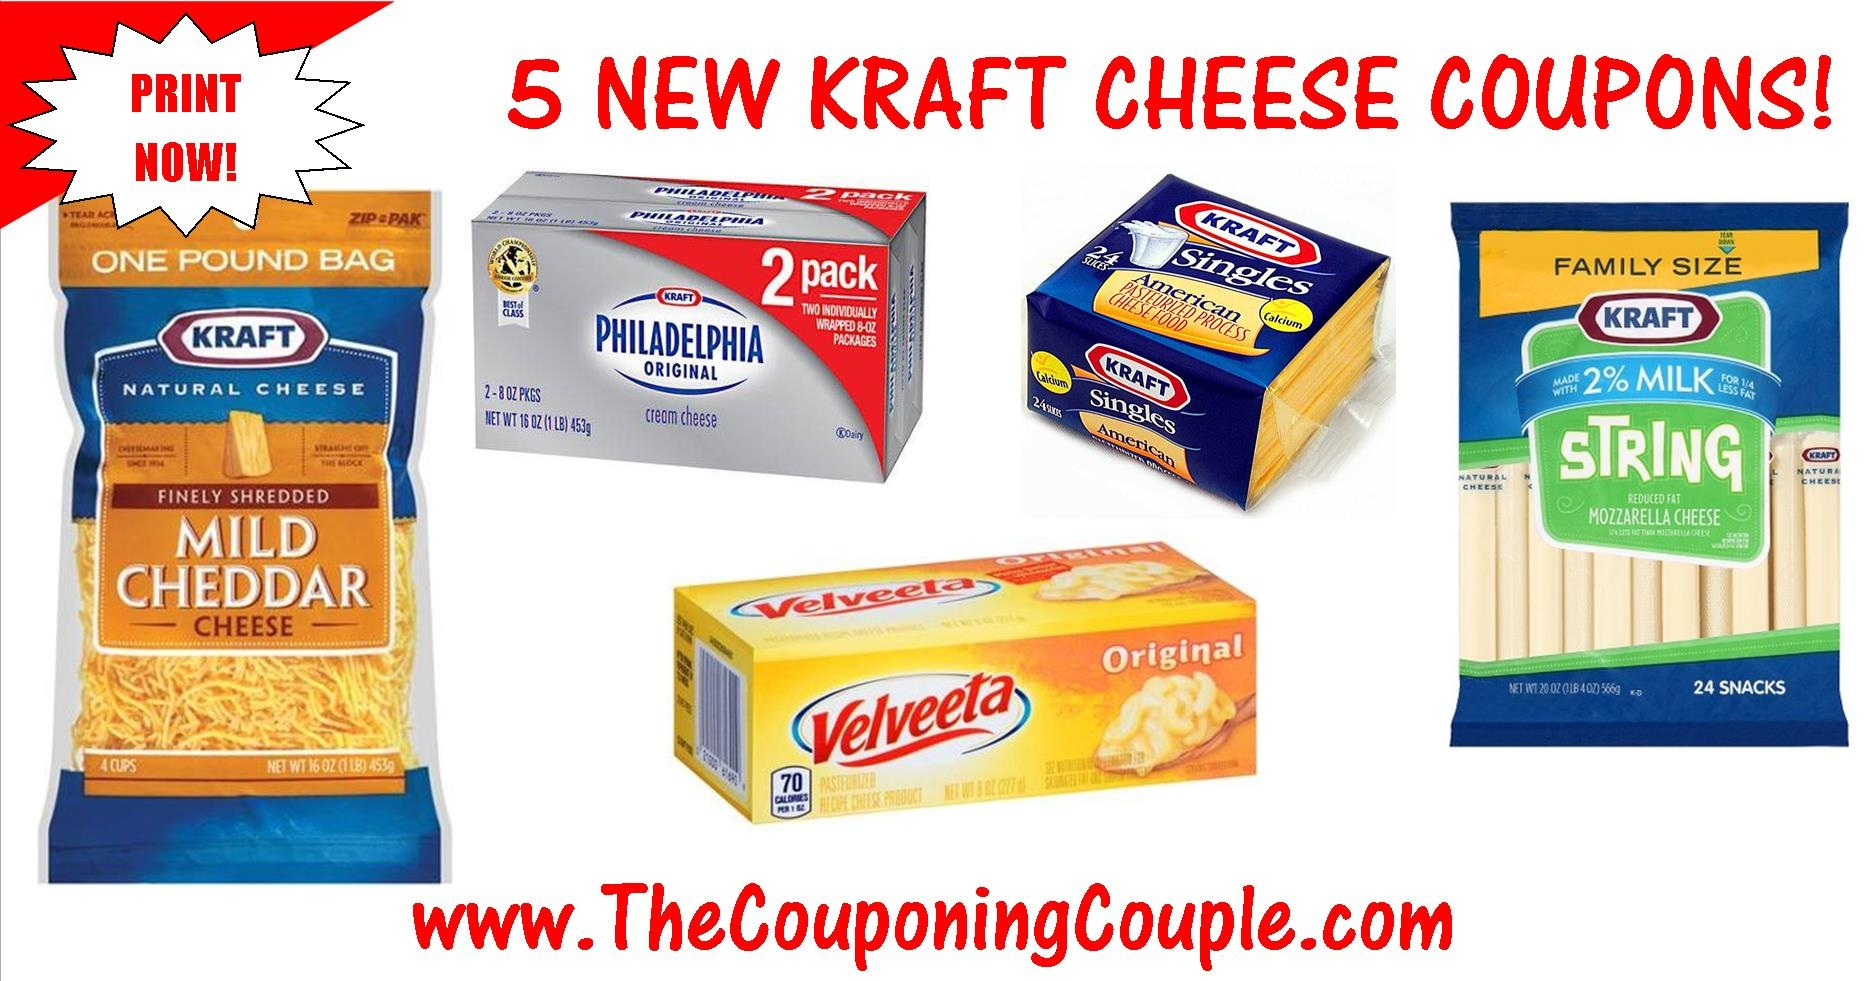 Kraft Cheese Coupons Printable regarding Free Printable Kraft Food Coupons